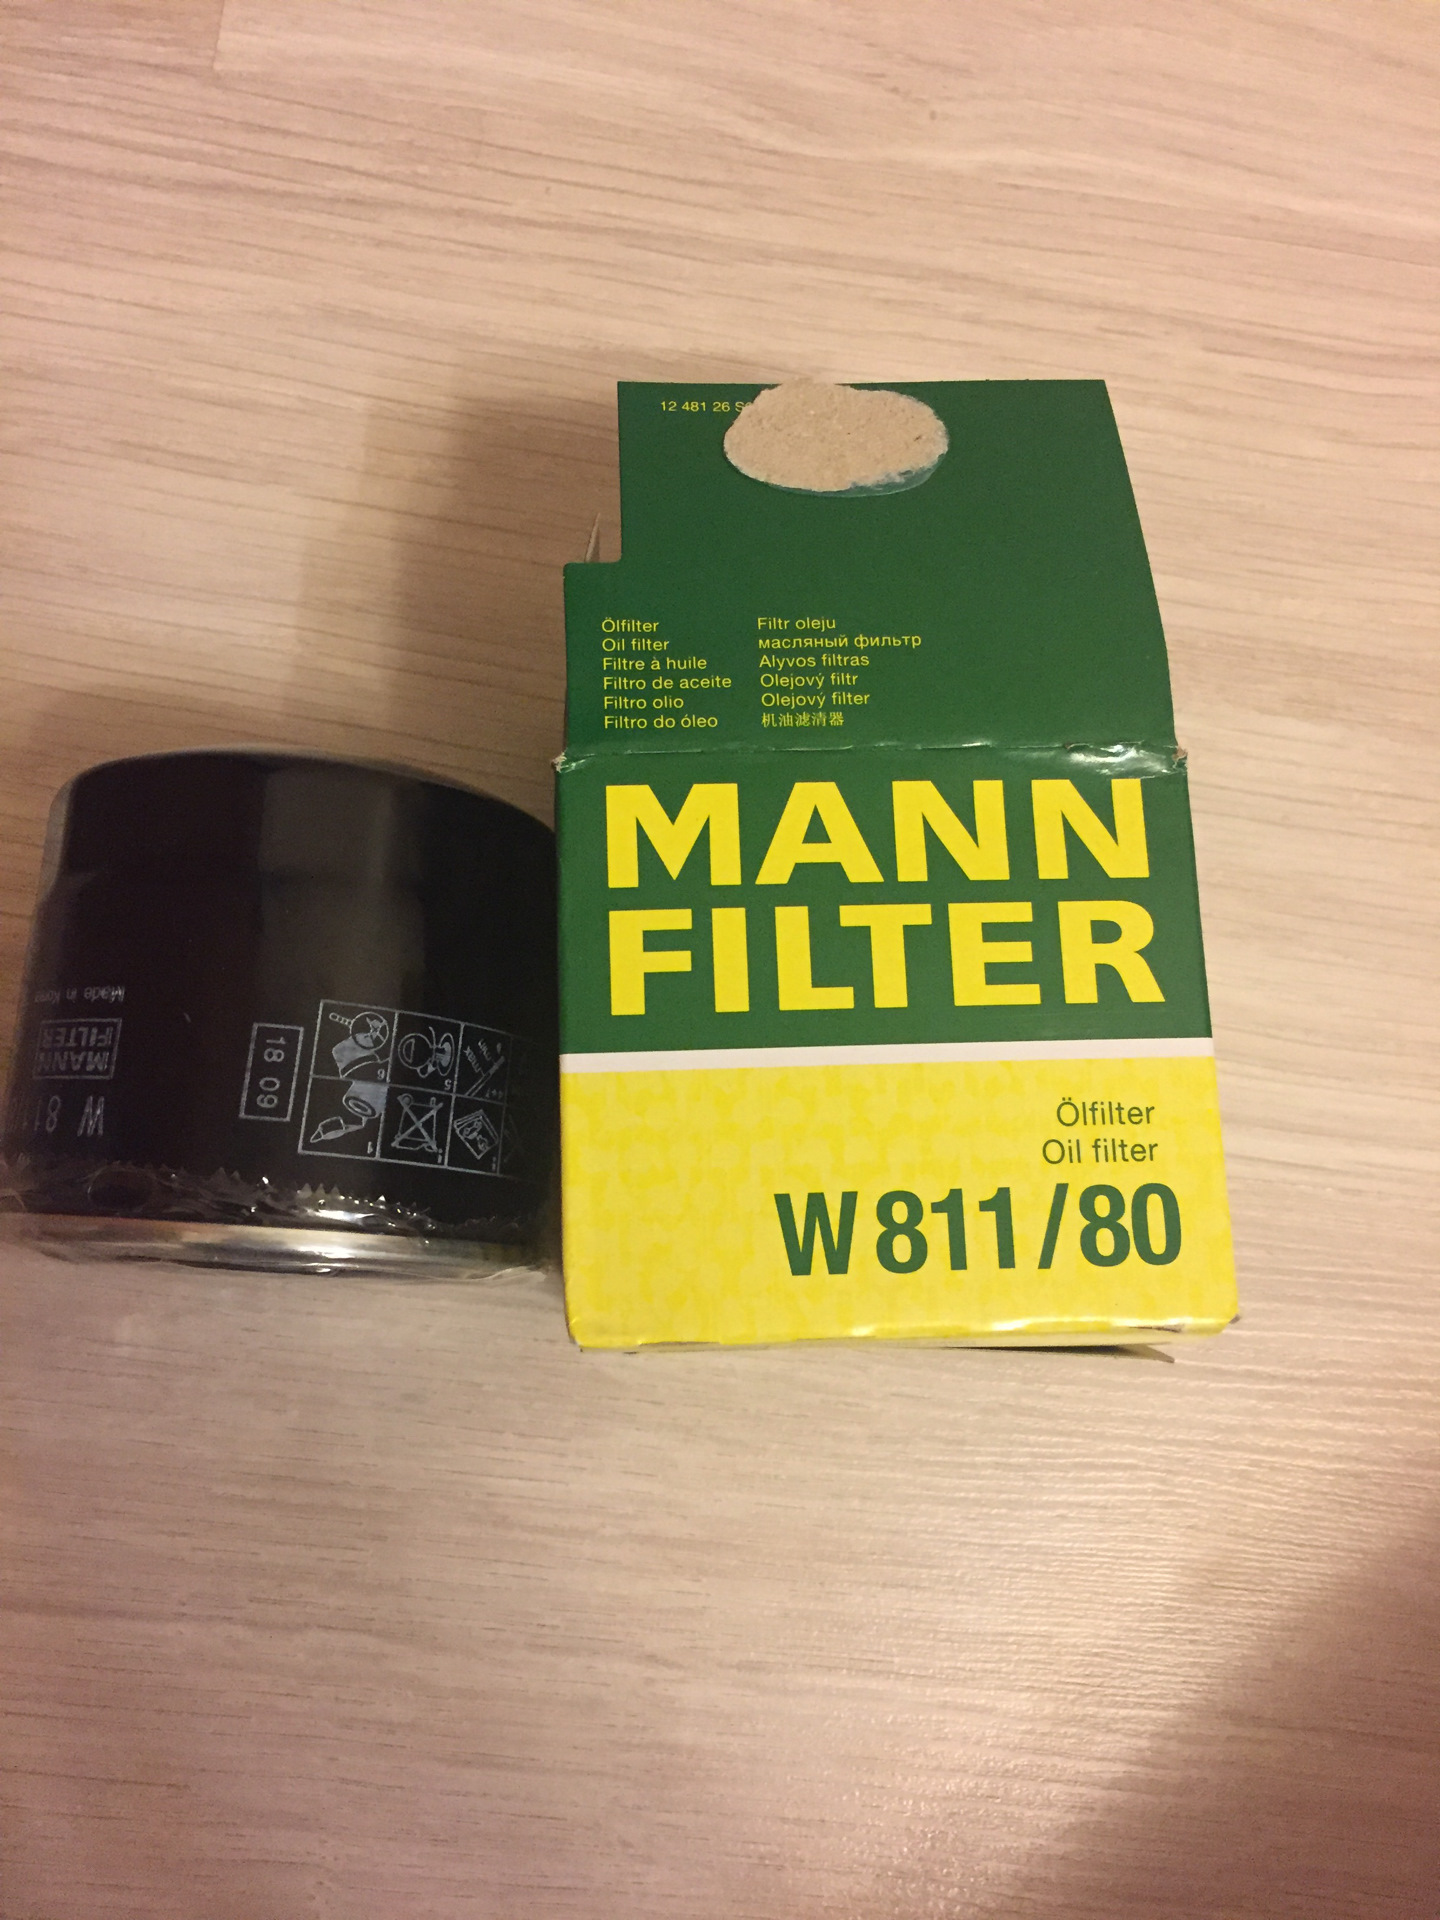 80 filter. Масляный фильтр Mann-Filter w 811/80. Hyundai Solaris фильтр масляный Манн 811. Фильтр масляный Mann w811/80 Хендай Солярис. Фильтр Манн w811/80 Китай.